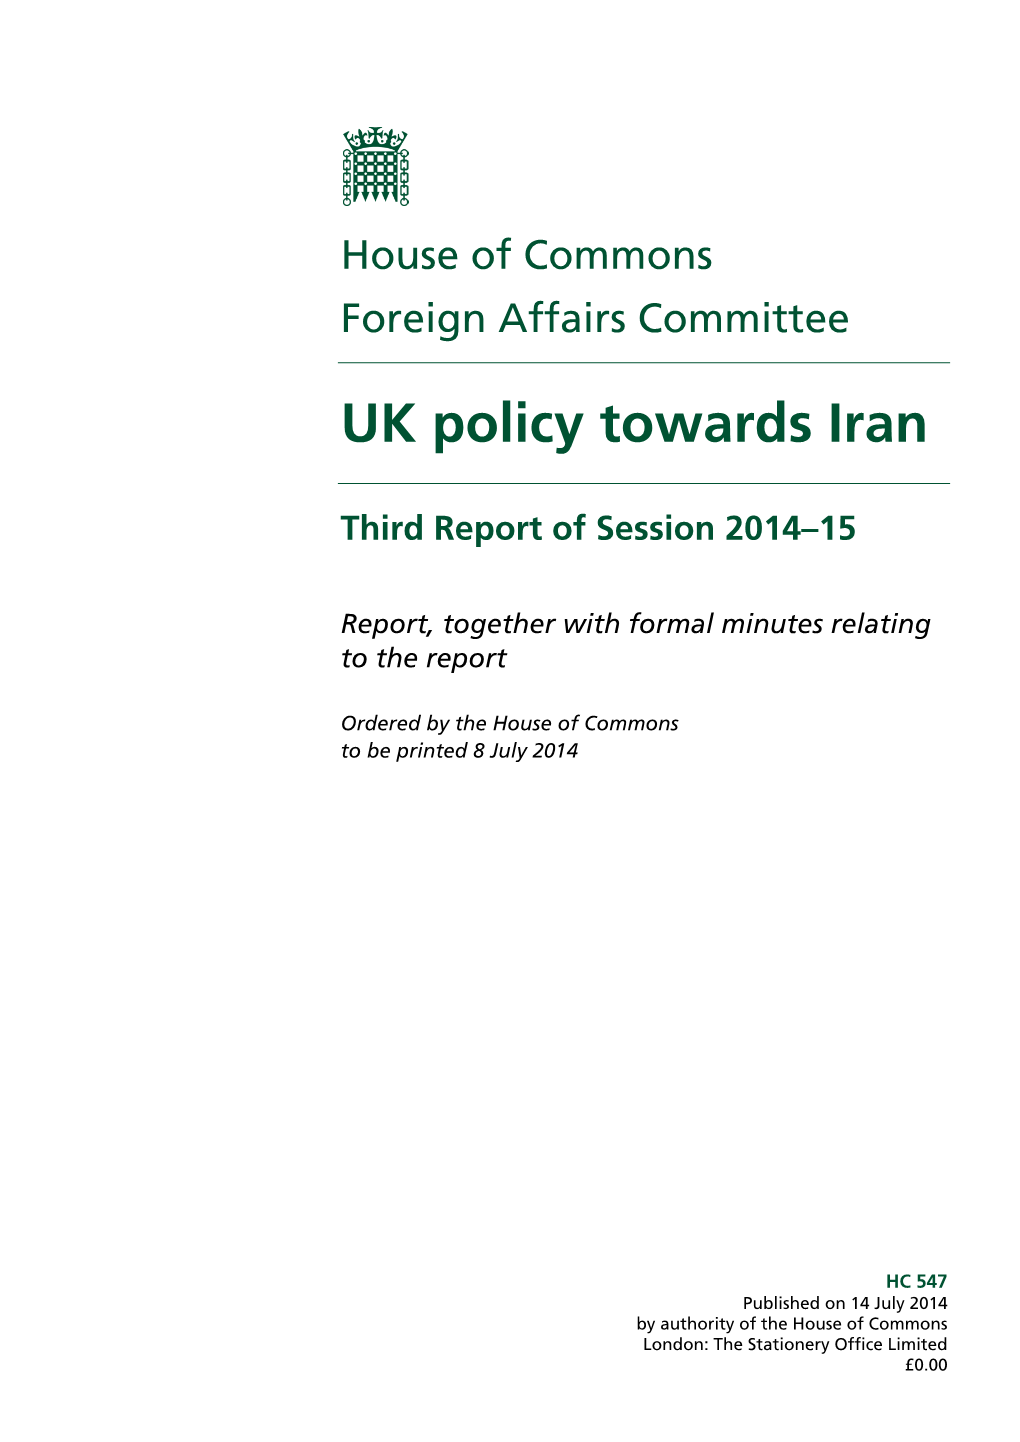 UK Policy Towards Iran